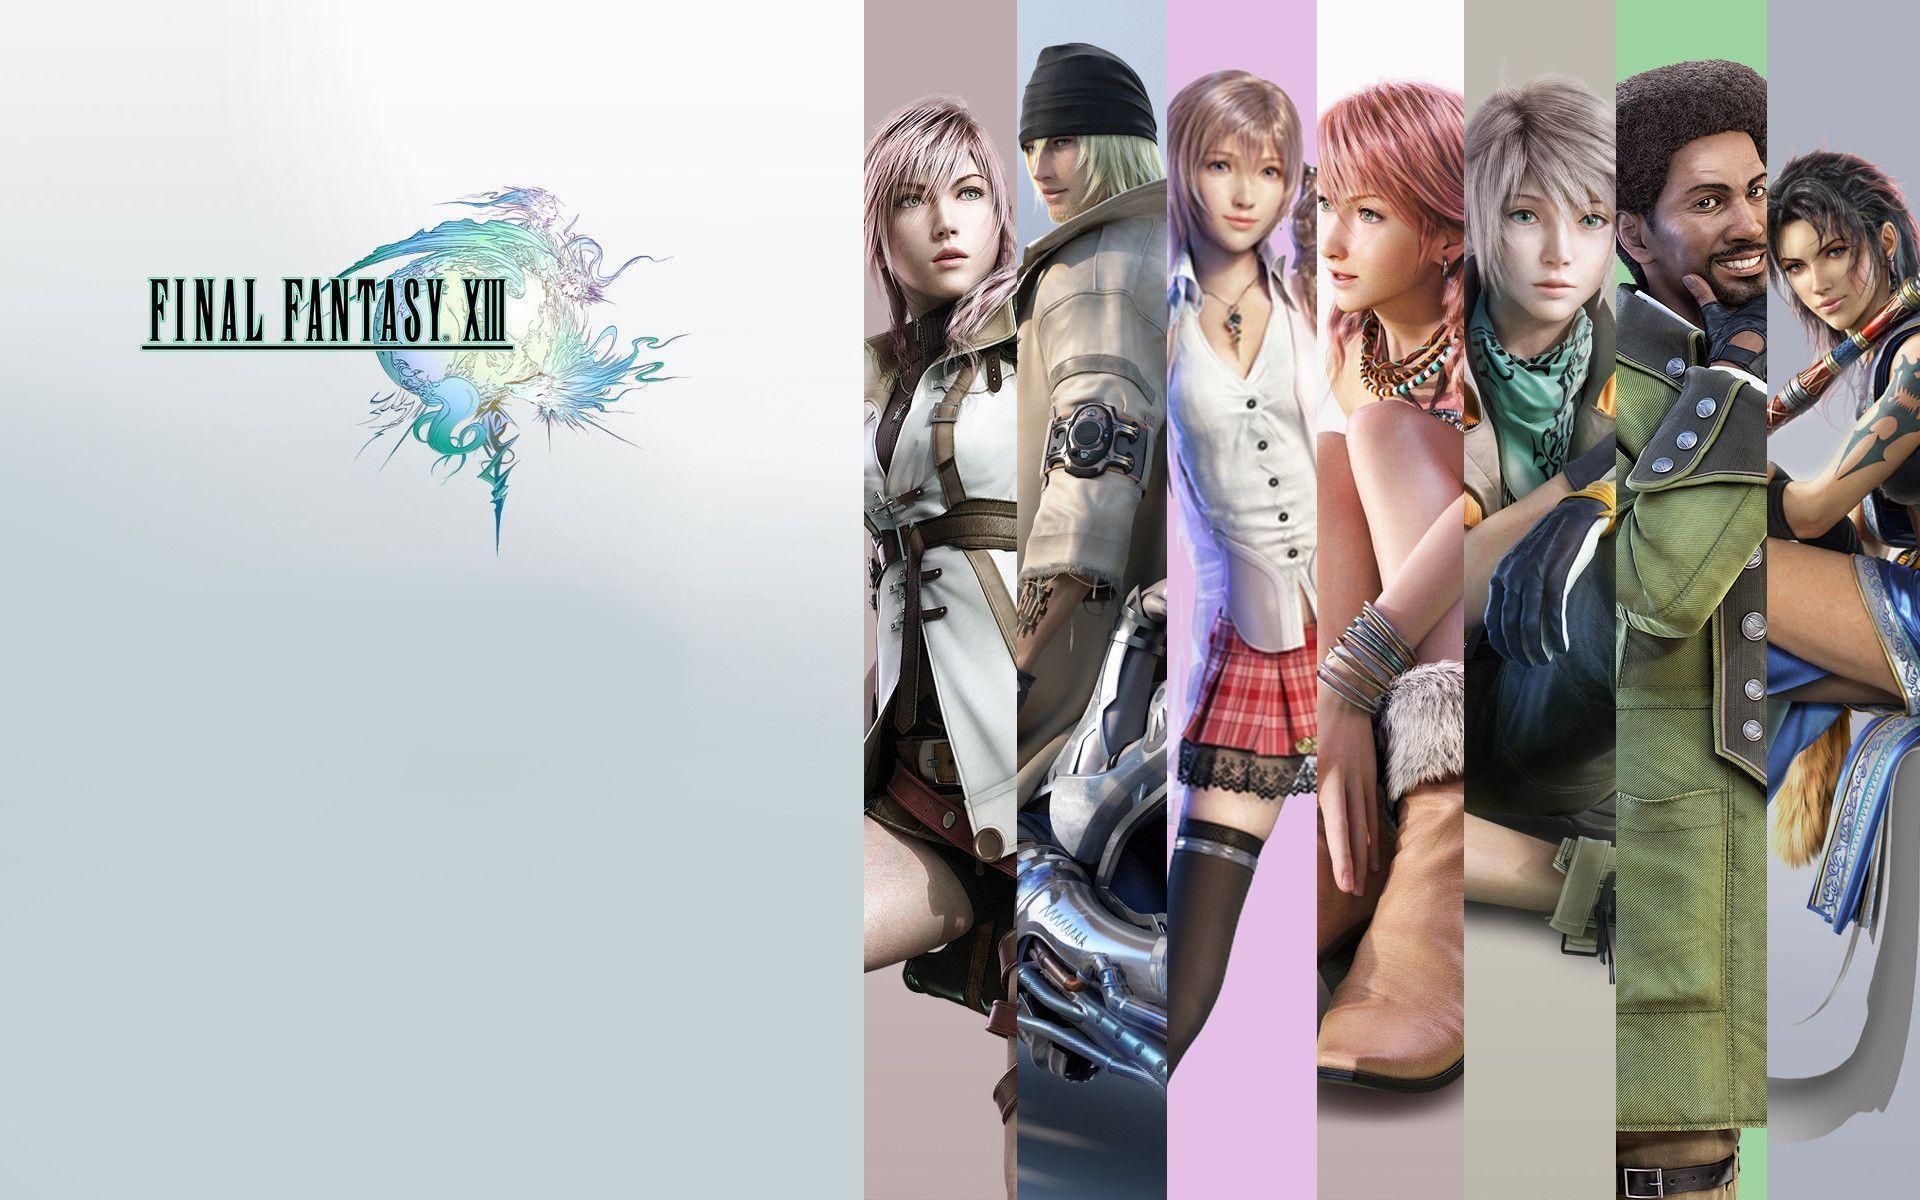 Final Fantasy 13 Wallpaper, wallpaper, Final Fantasy 13 Wallpaper